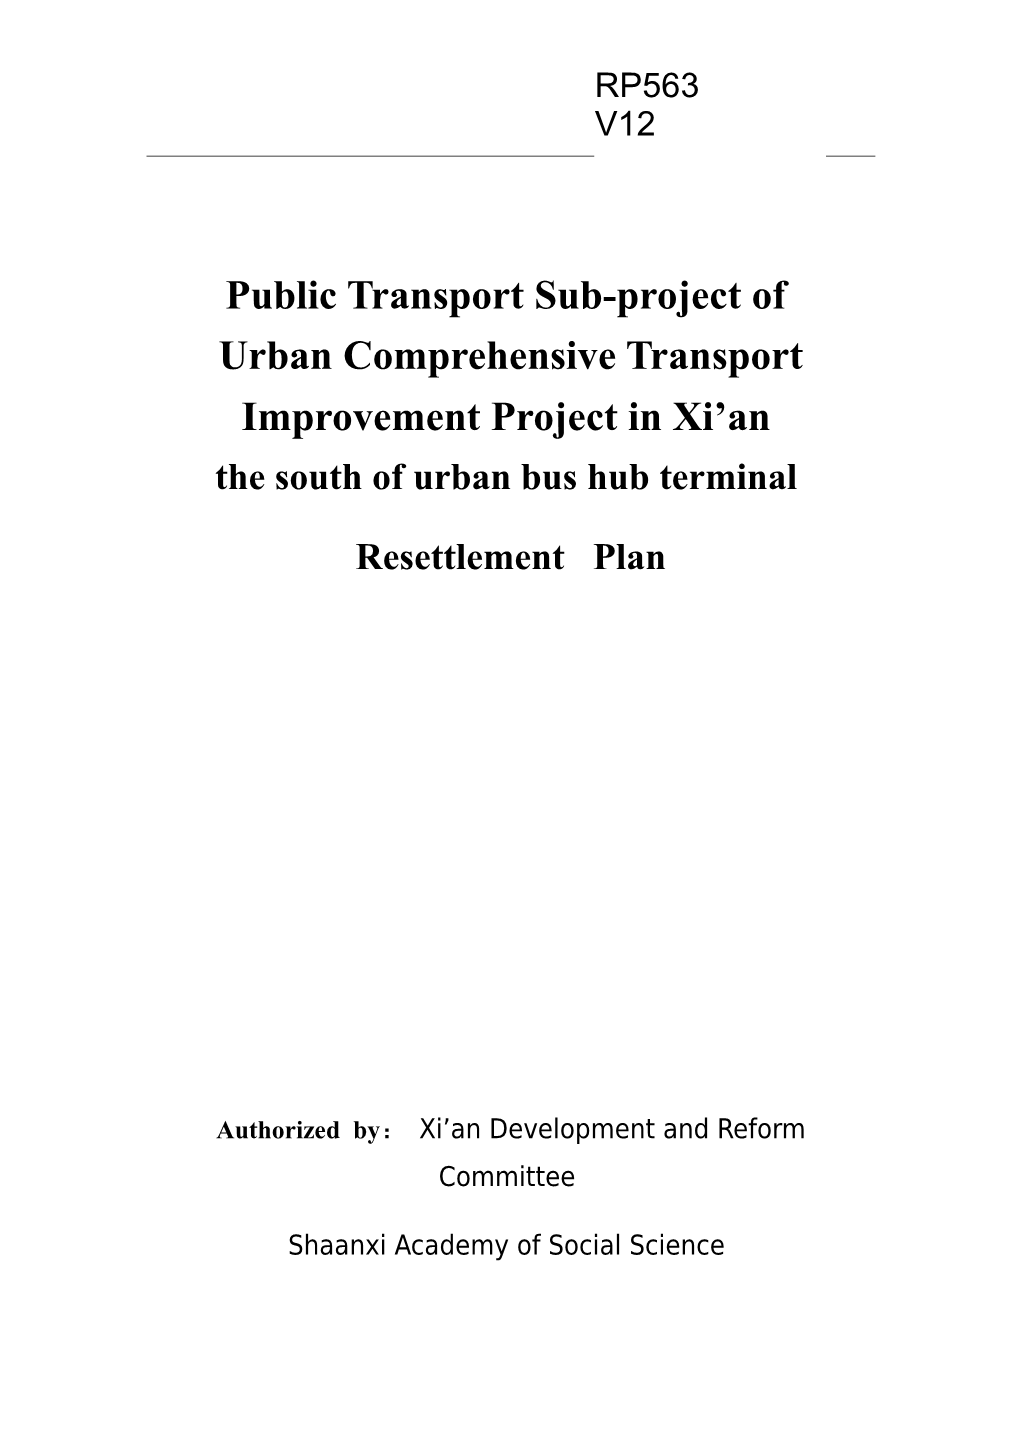 Public Transport Sub-Project Of